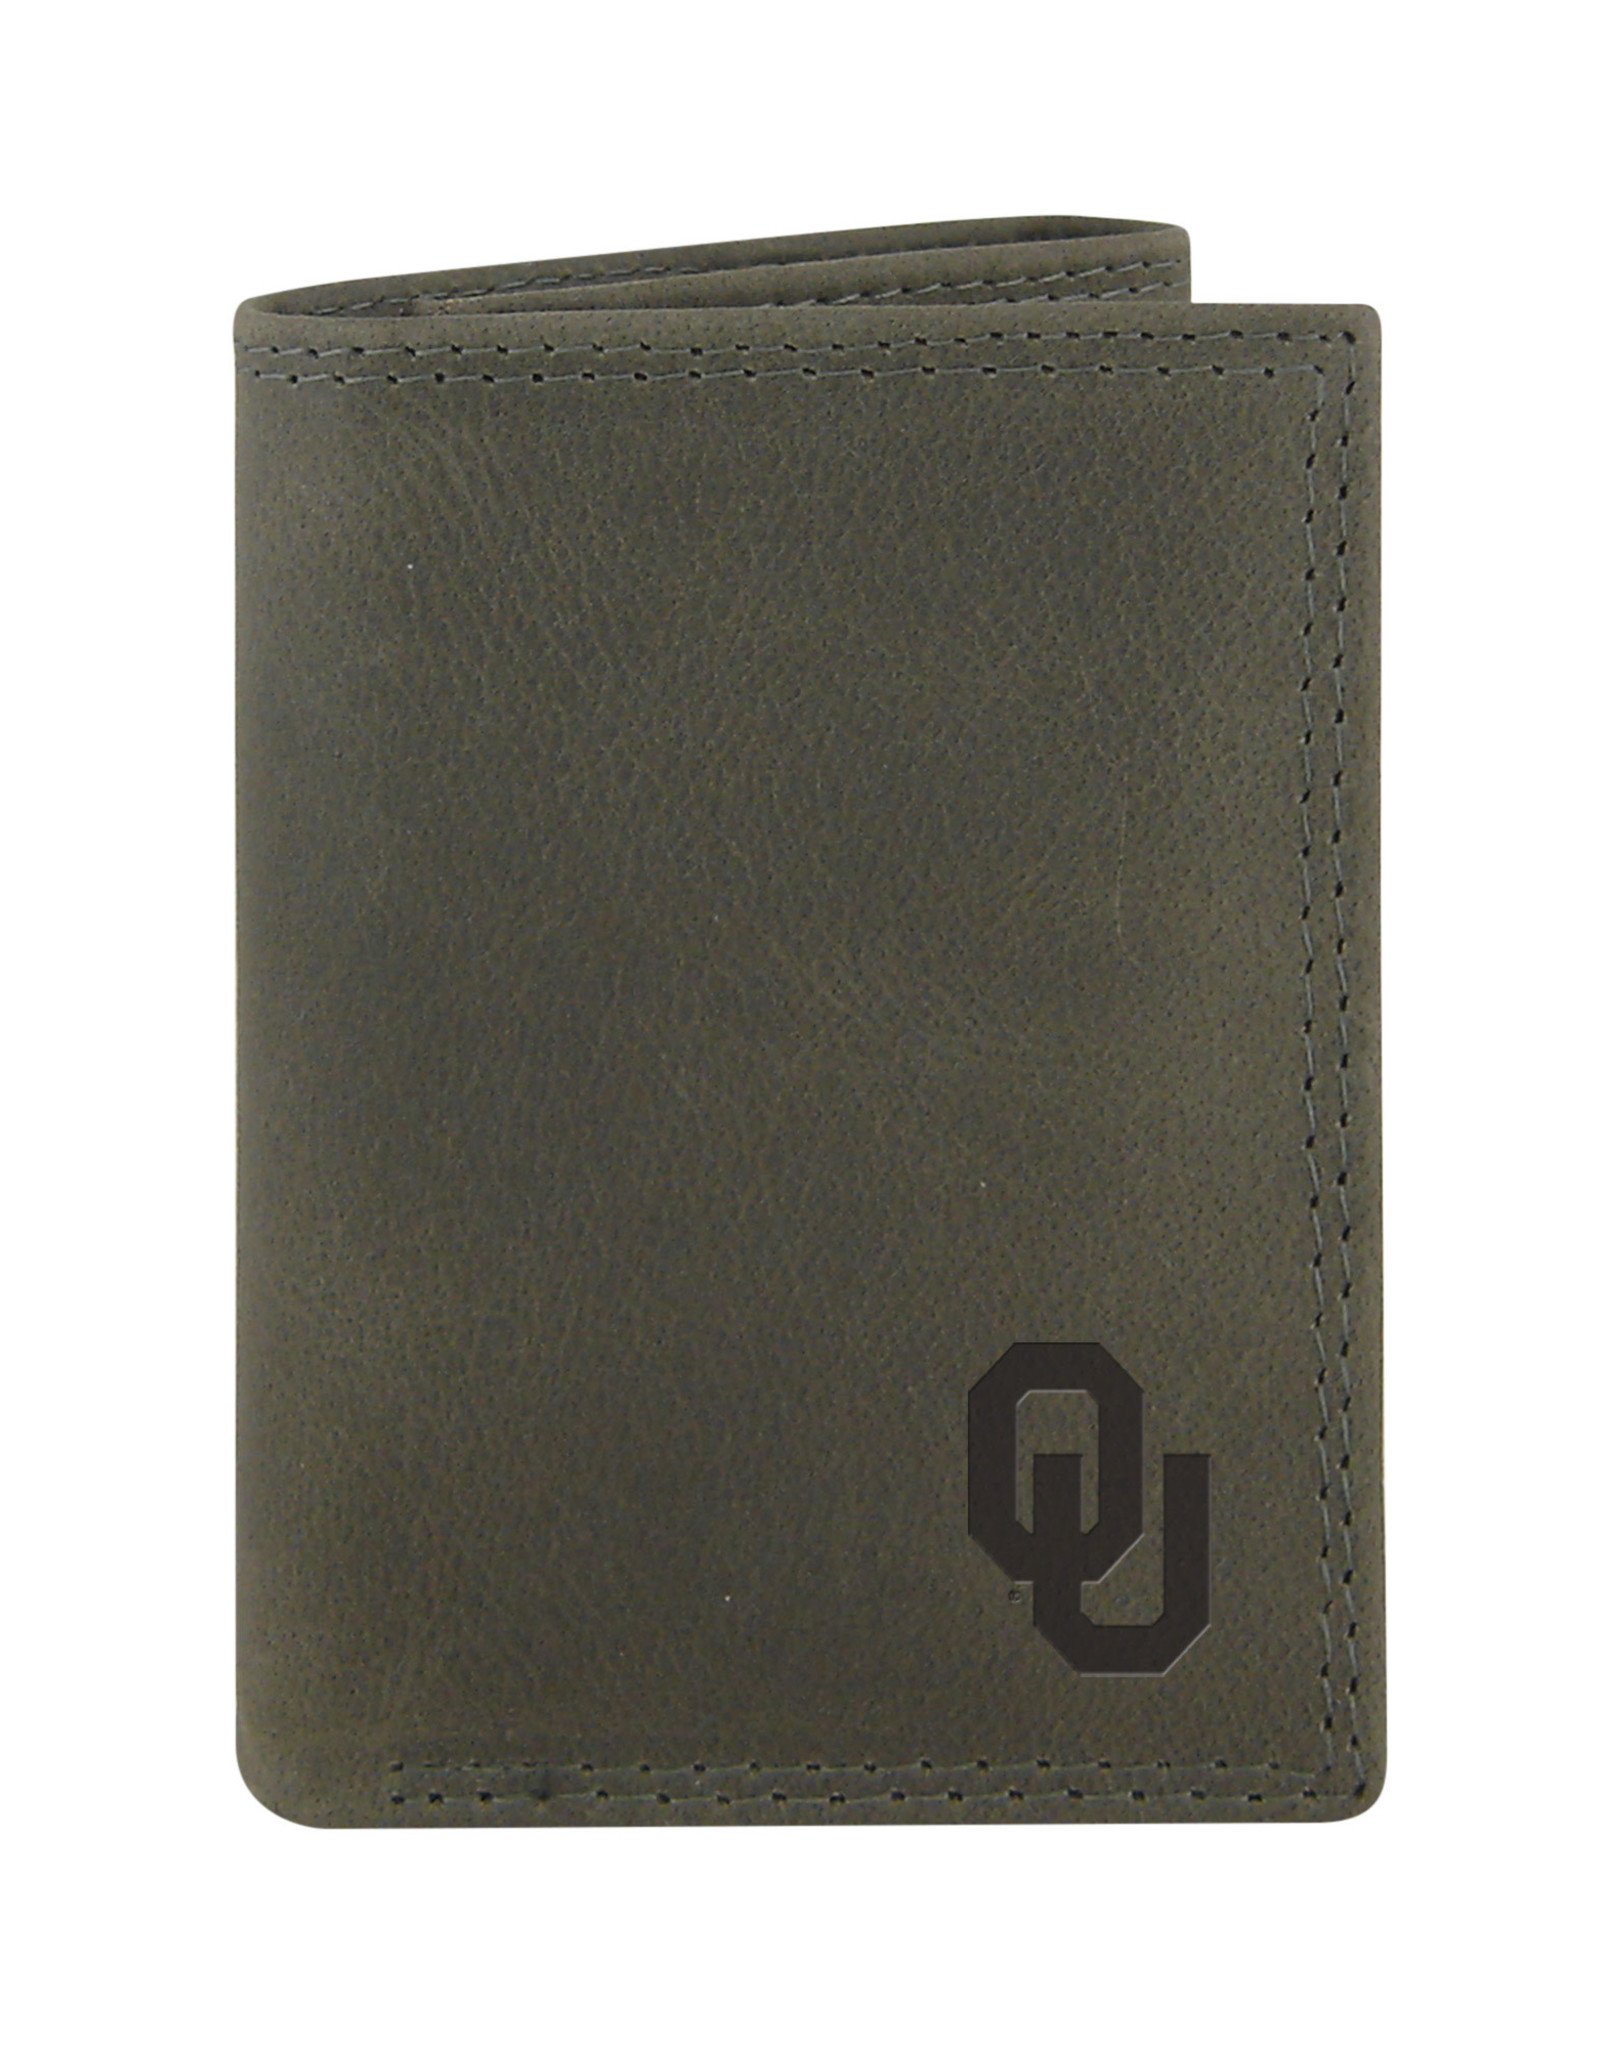 Zep-Pro Zep-Pro OU Gray Leather TriFold Wallet